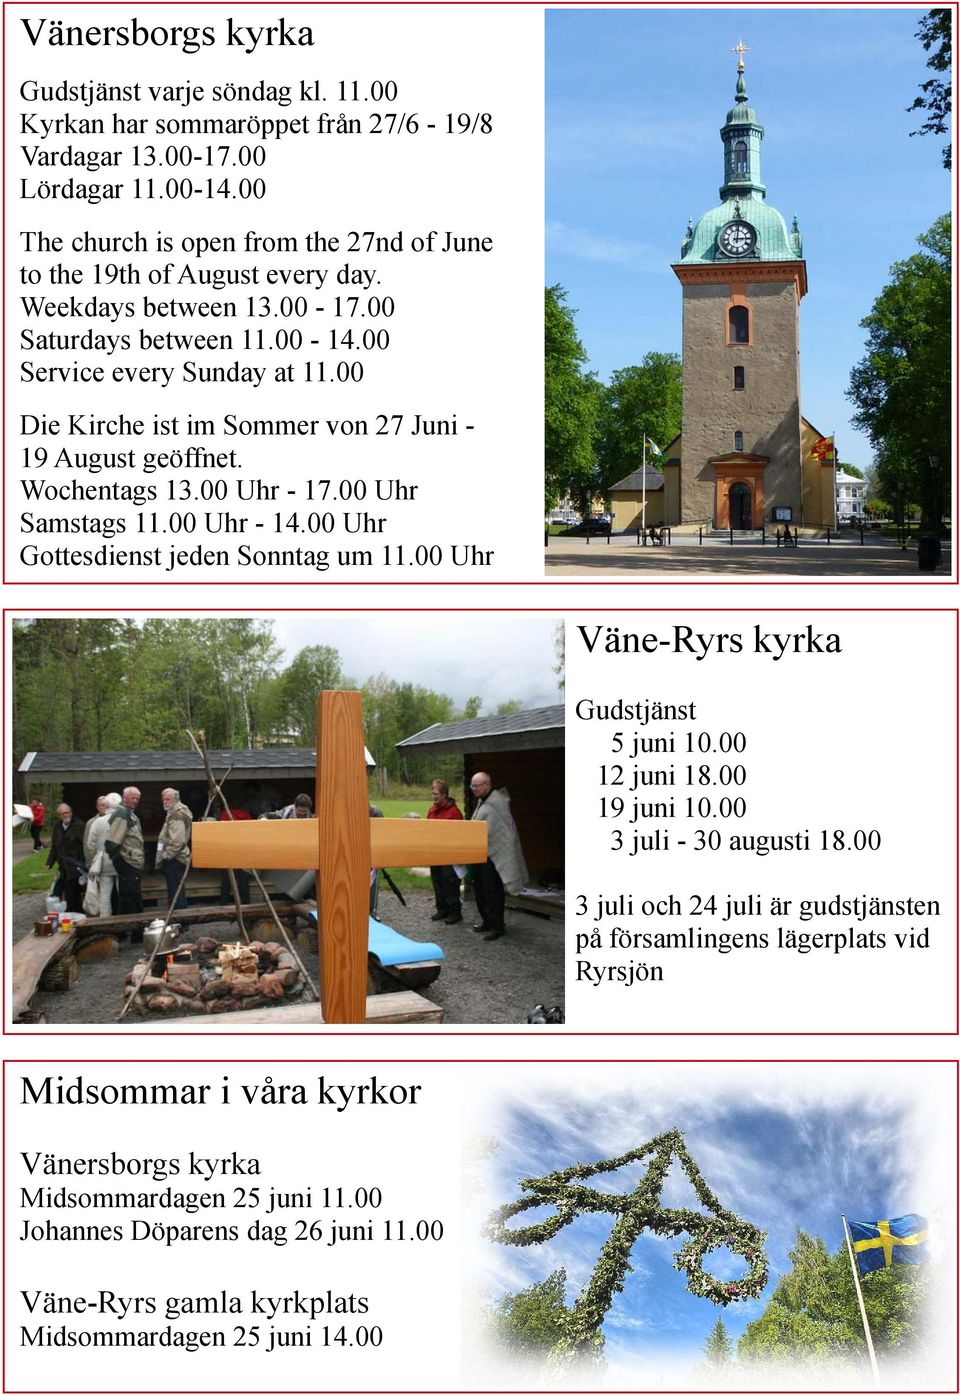 00 Uhr Samstags 11.00 Uhr - 14.00 Uhr Gottesdienst jeden Sonntag um 11.00 Uhr Väne-Ryrs kyrka Gudstjänst 05 juni 10.00 12 juni 18.00 19 juni 10.00 03 juli - 30 augusti 18.